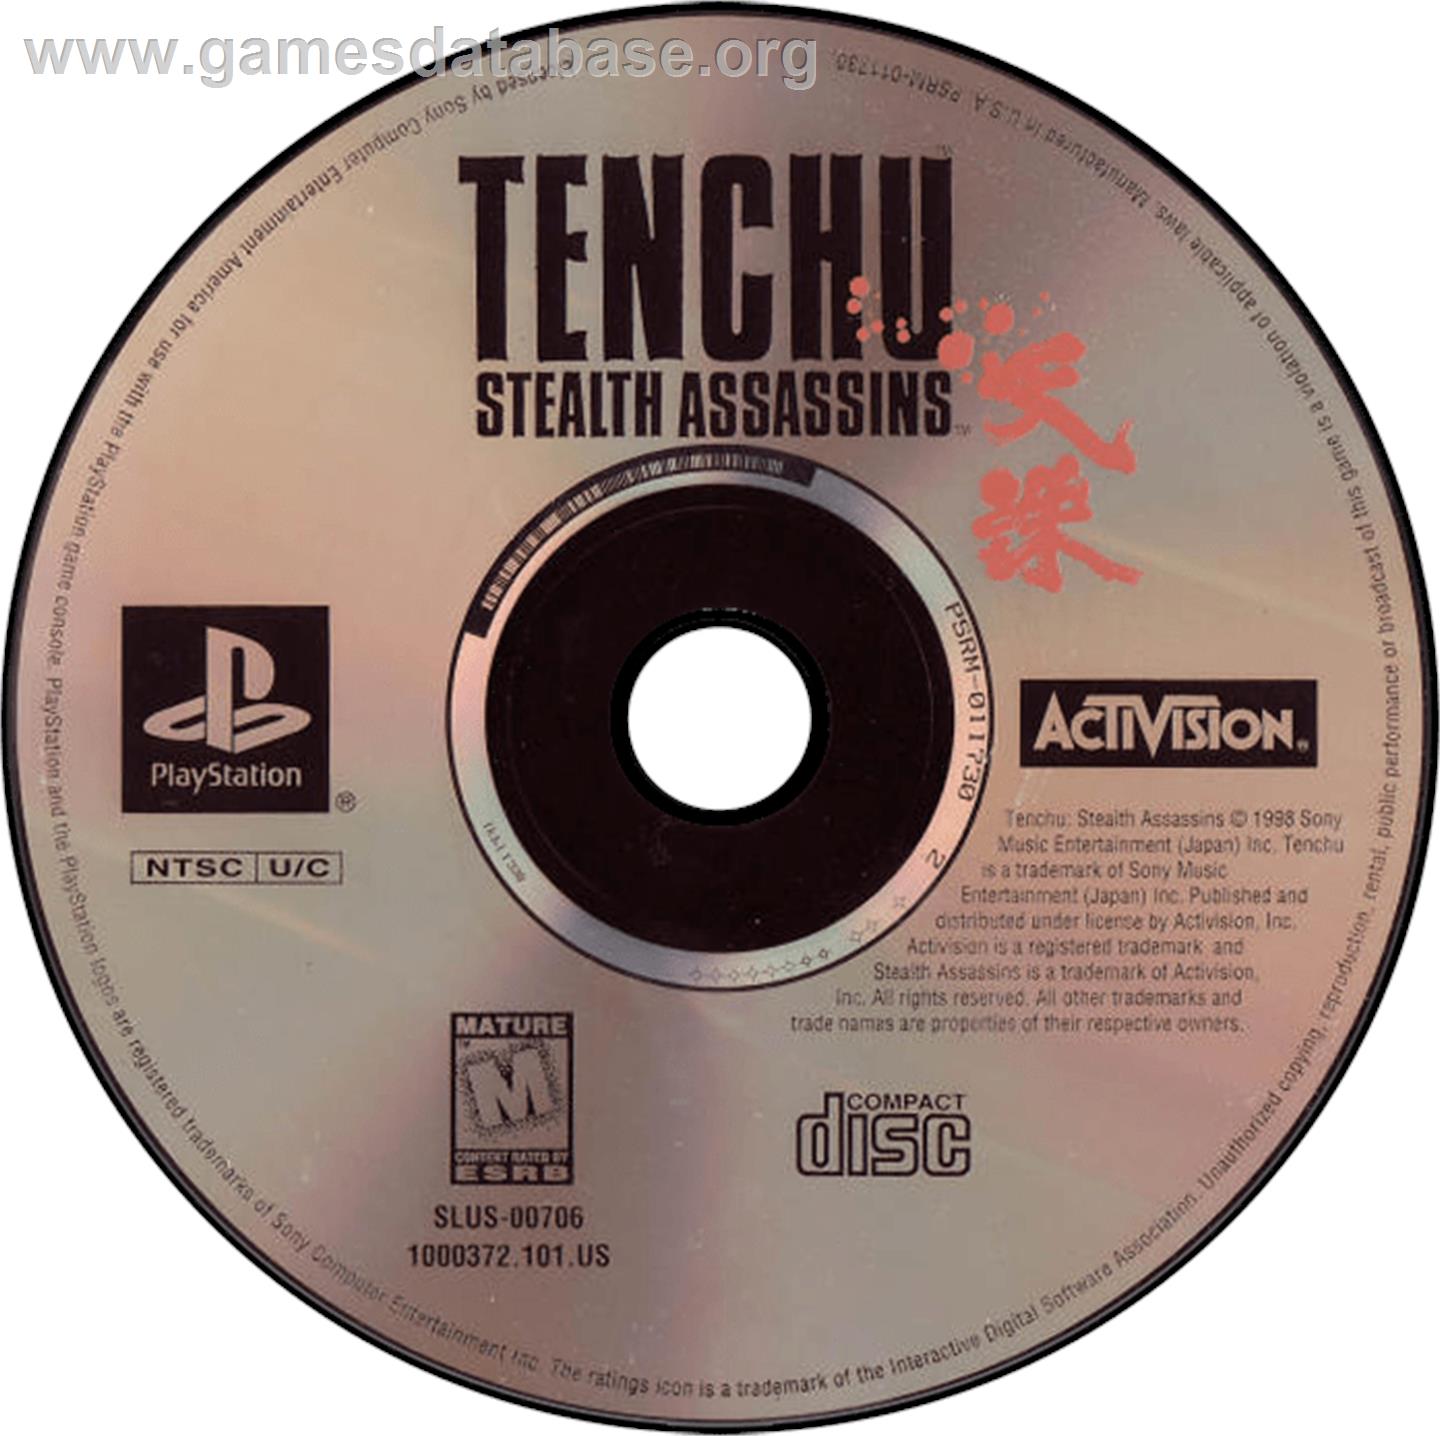 Tenchu: Stealth Assassins - Sony Playstation - Artwork - Disc